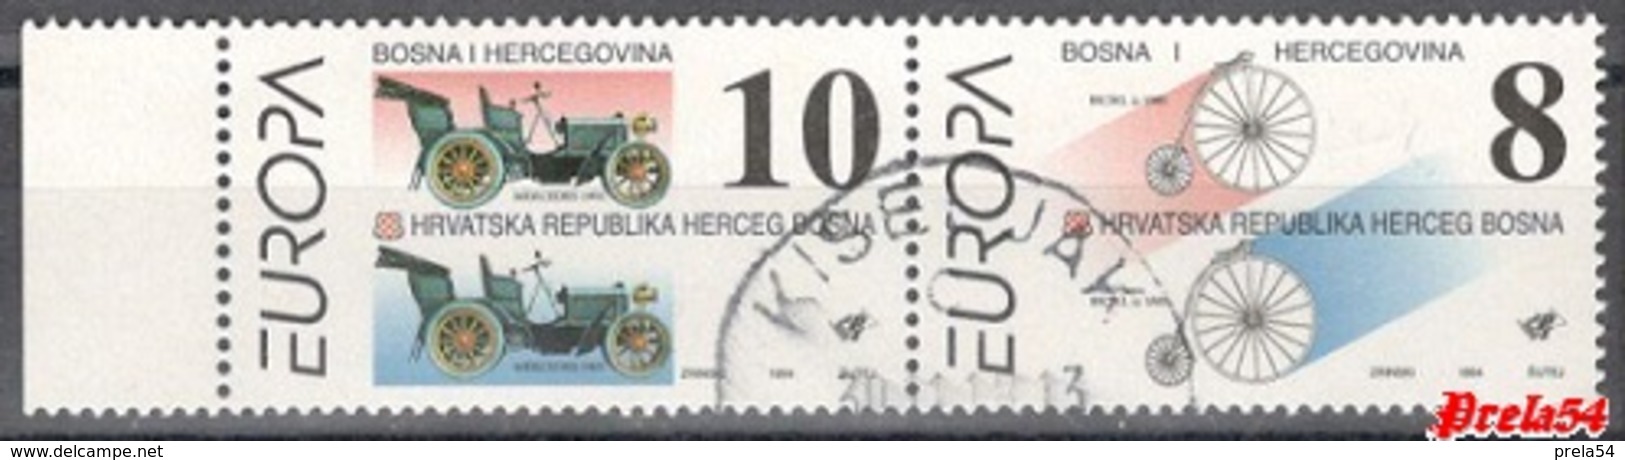 Bosnia Croatian Post -  EUROPA 1994 Used Pair - Bosnia And Herzegovina